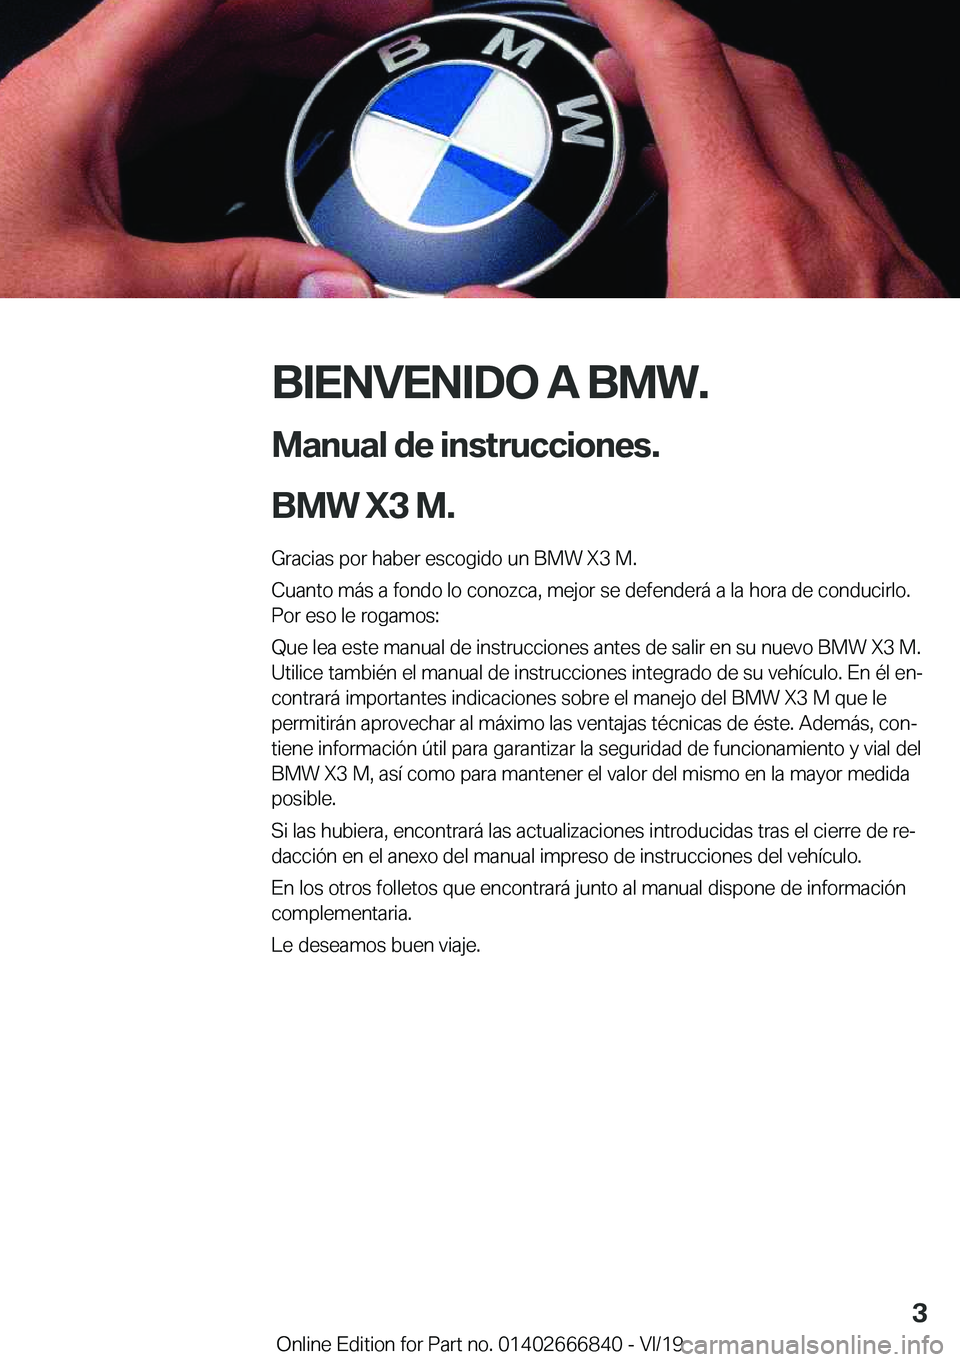 BMW X3 M 2020  Manuales de Empleo (in Spanish) �B�I�E�N�V�E�N�I�D�O��A��B�M�W�.
�M�a�n�u�a�l��d�e��i�n�s�t�r�u�c�c�i�o�n�e�s�.
�B�M�W��X�3��M�. �G�r�a�c�i�a�s��p�o�r��h�a�b�e�r��e�s�c�o�g�i�d�o��u�n��B�M�W��X�3��M�.
�C�u�a�n�t�o��m�